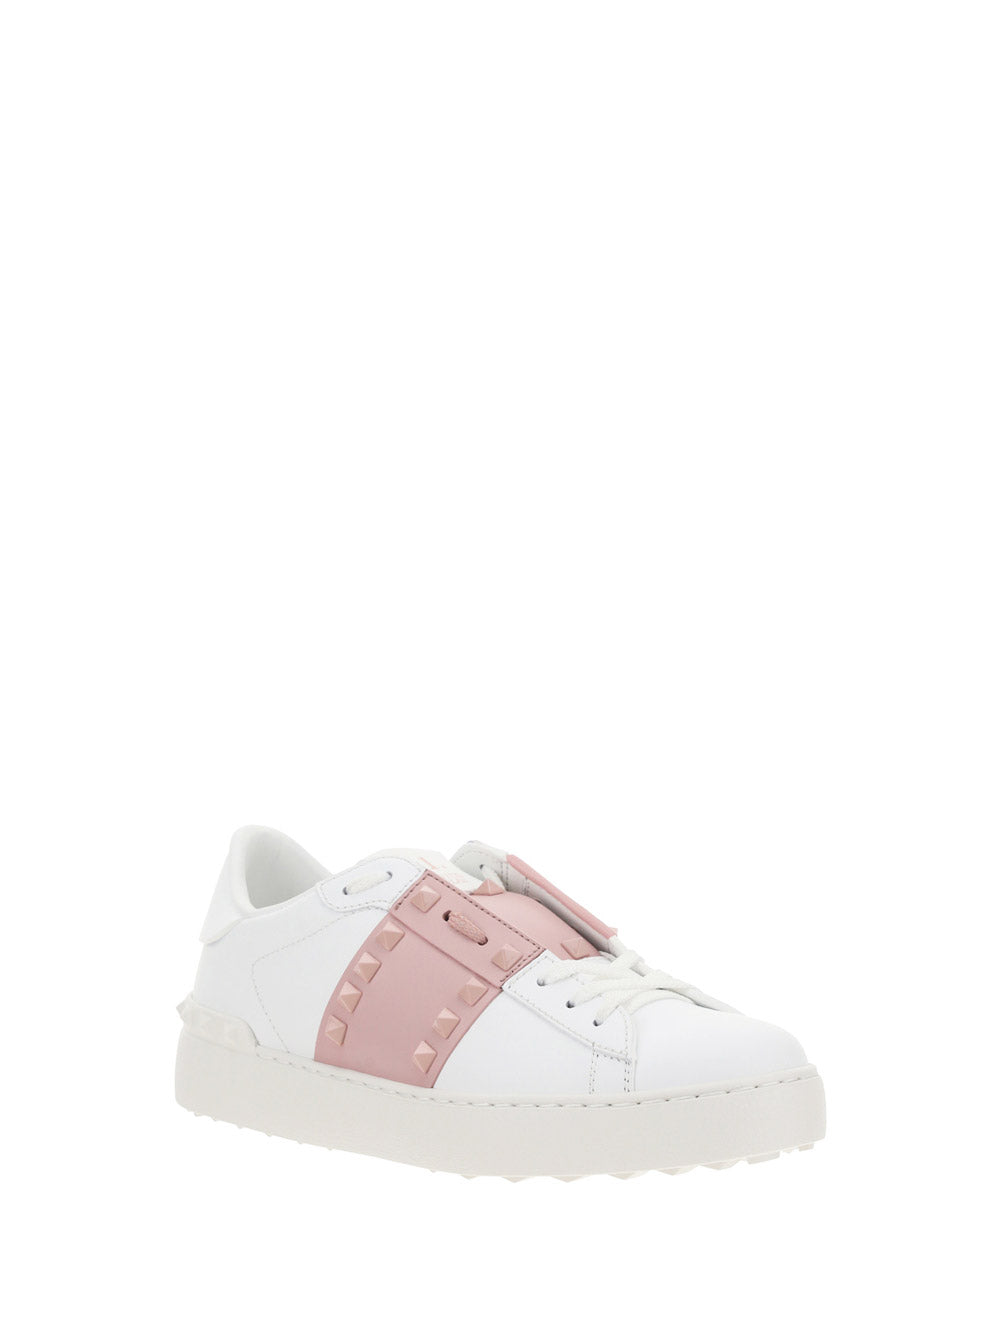 Open Sneaker In Calfskin Leather - White / Pink